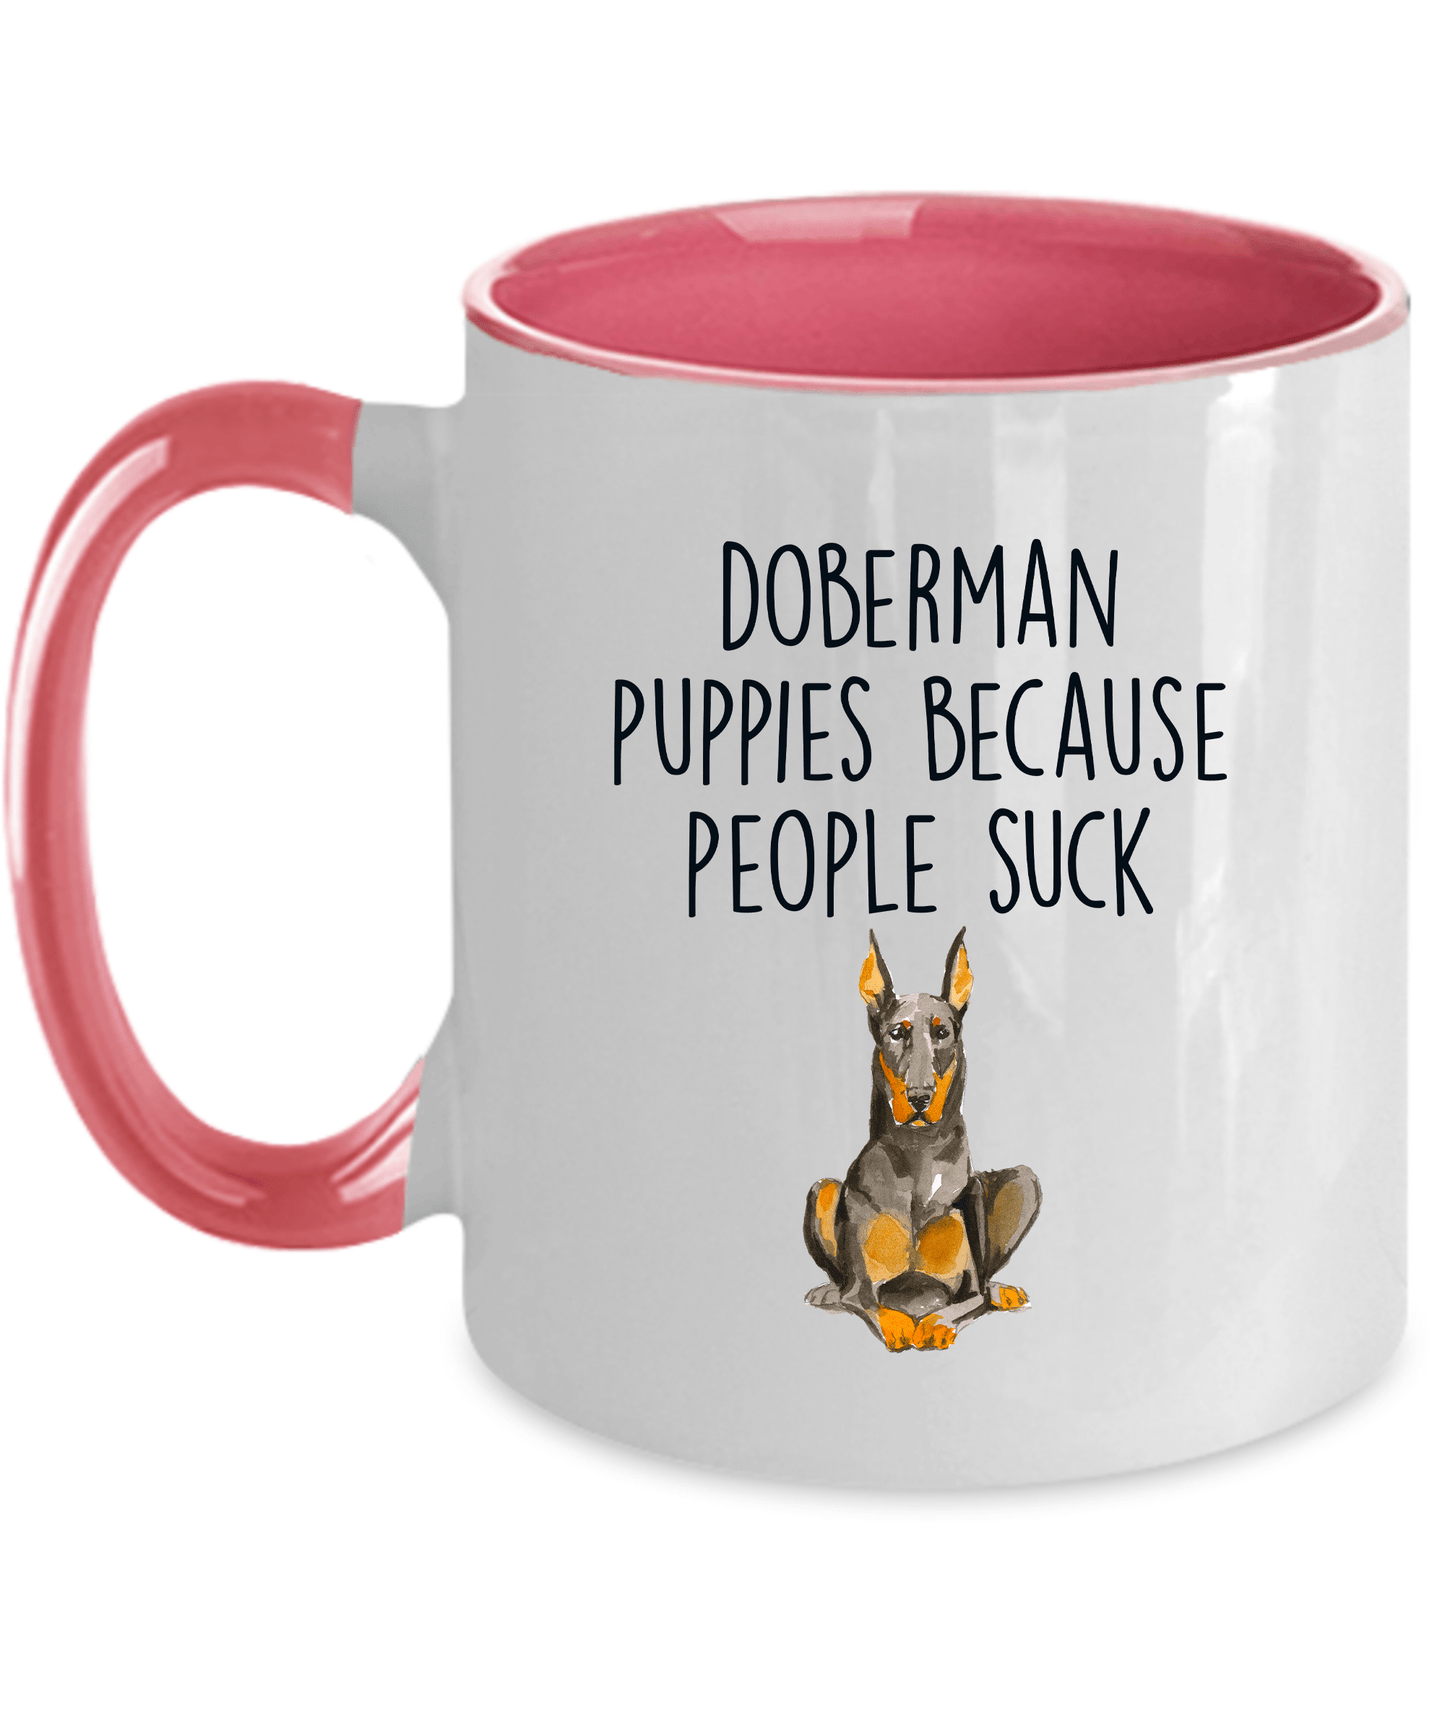 Doberman Puppies Because People Such Funny Dog Ceramic Coffee Mug